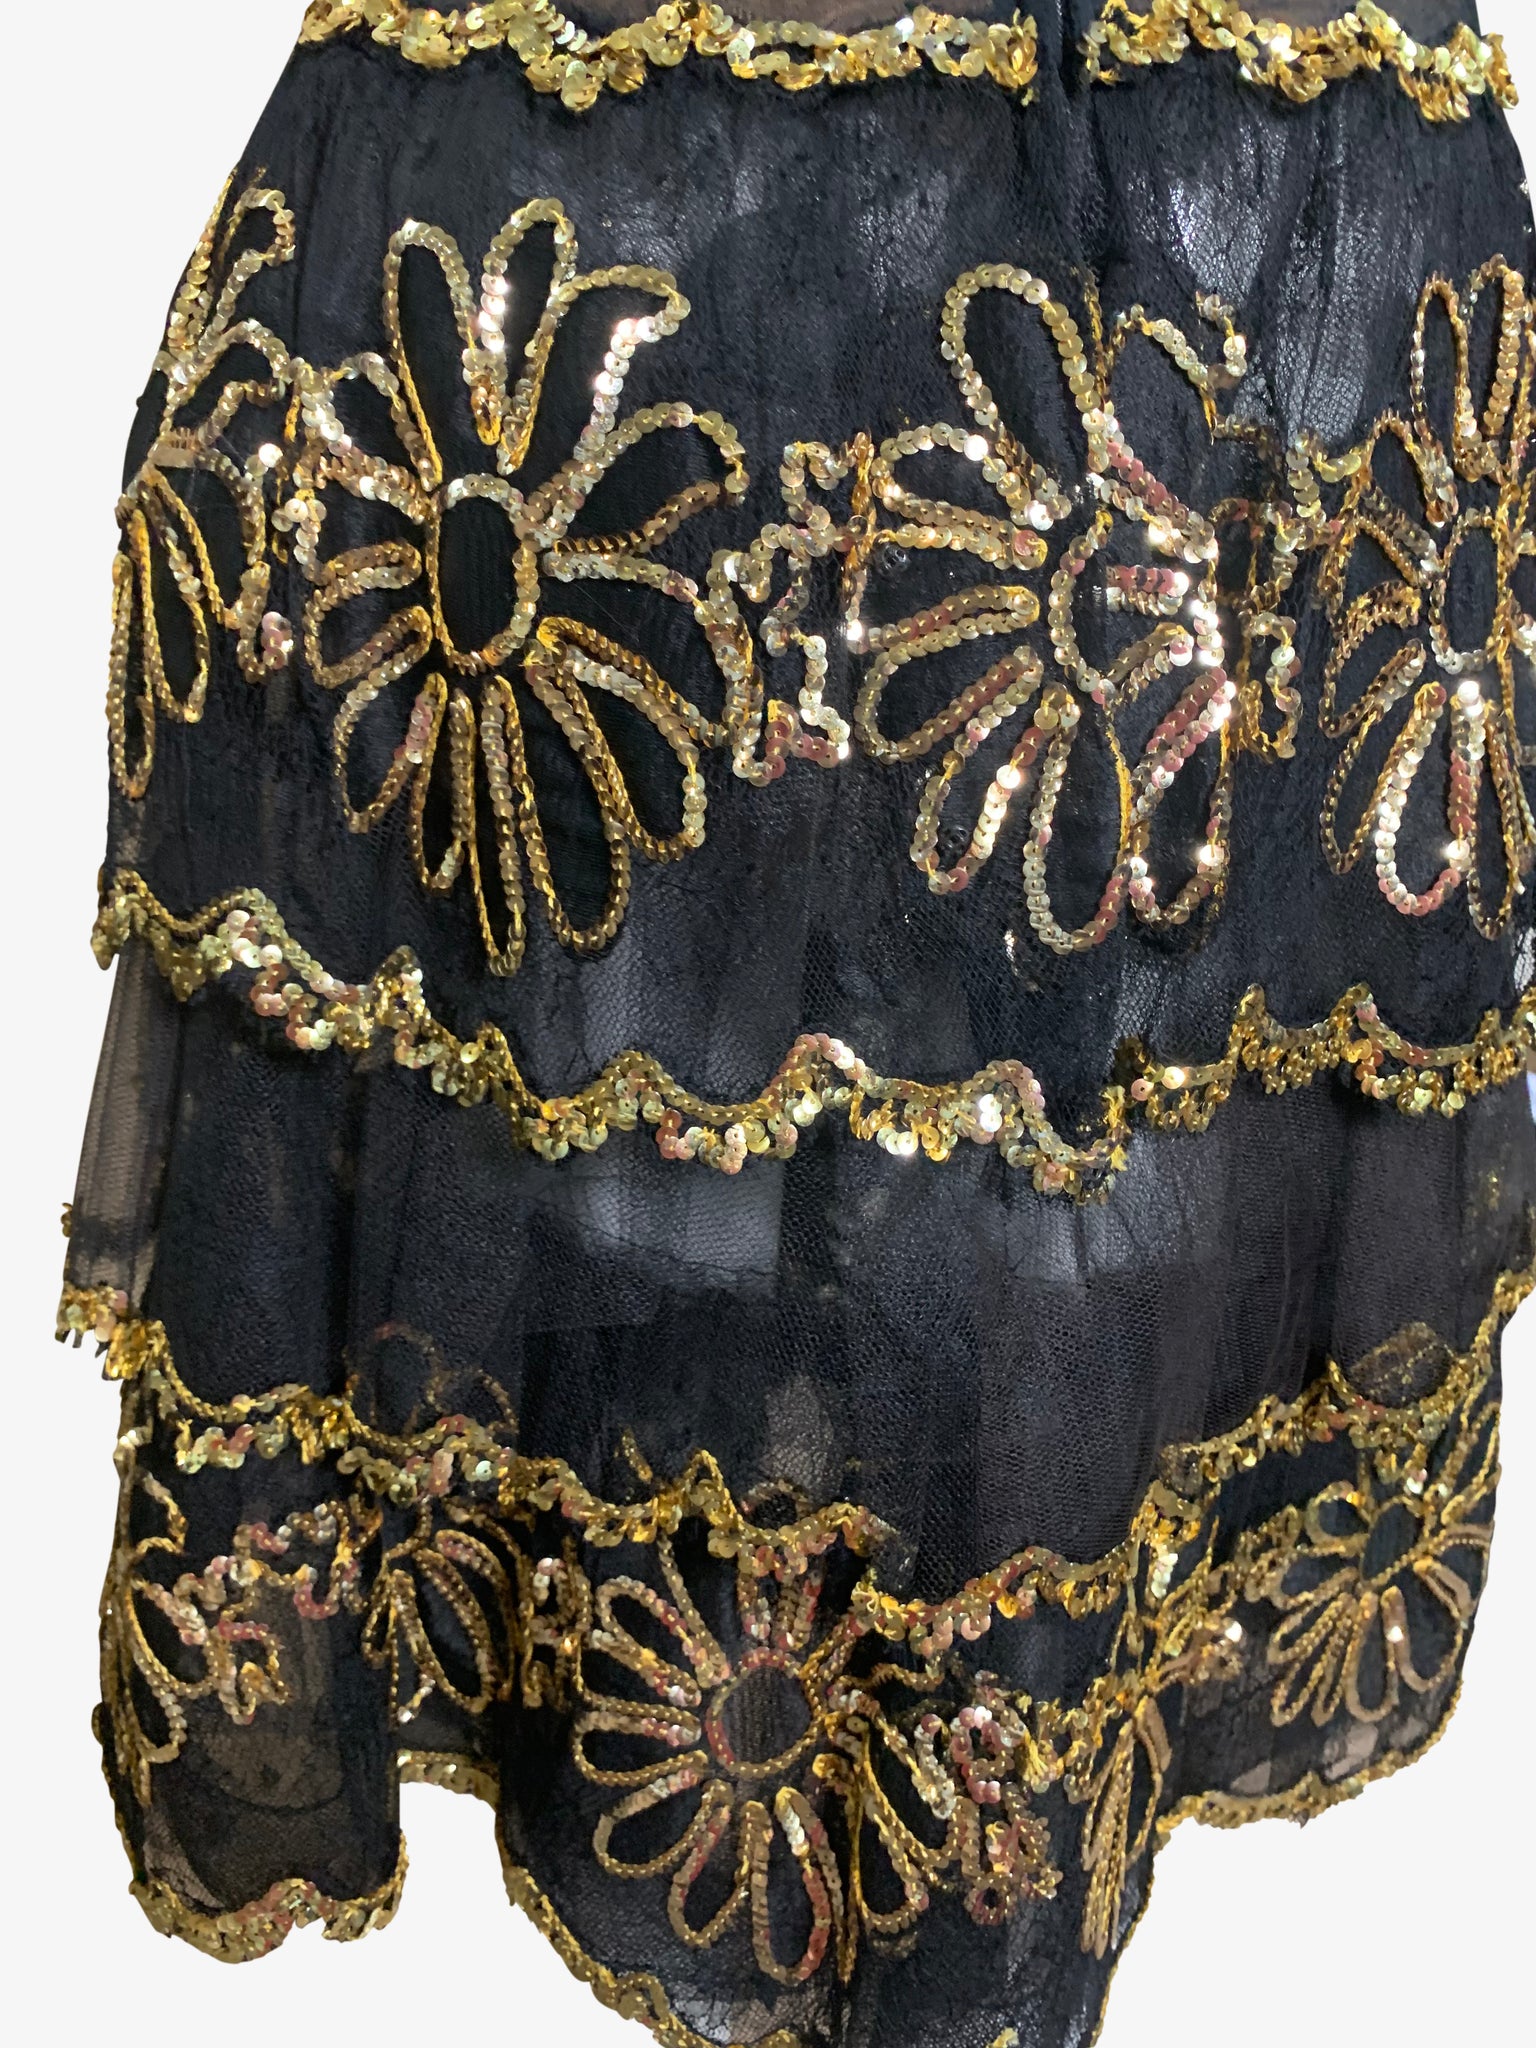 80s Black & Gold Sheer Strapless Embroidered Cocktail Dress, skirt